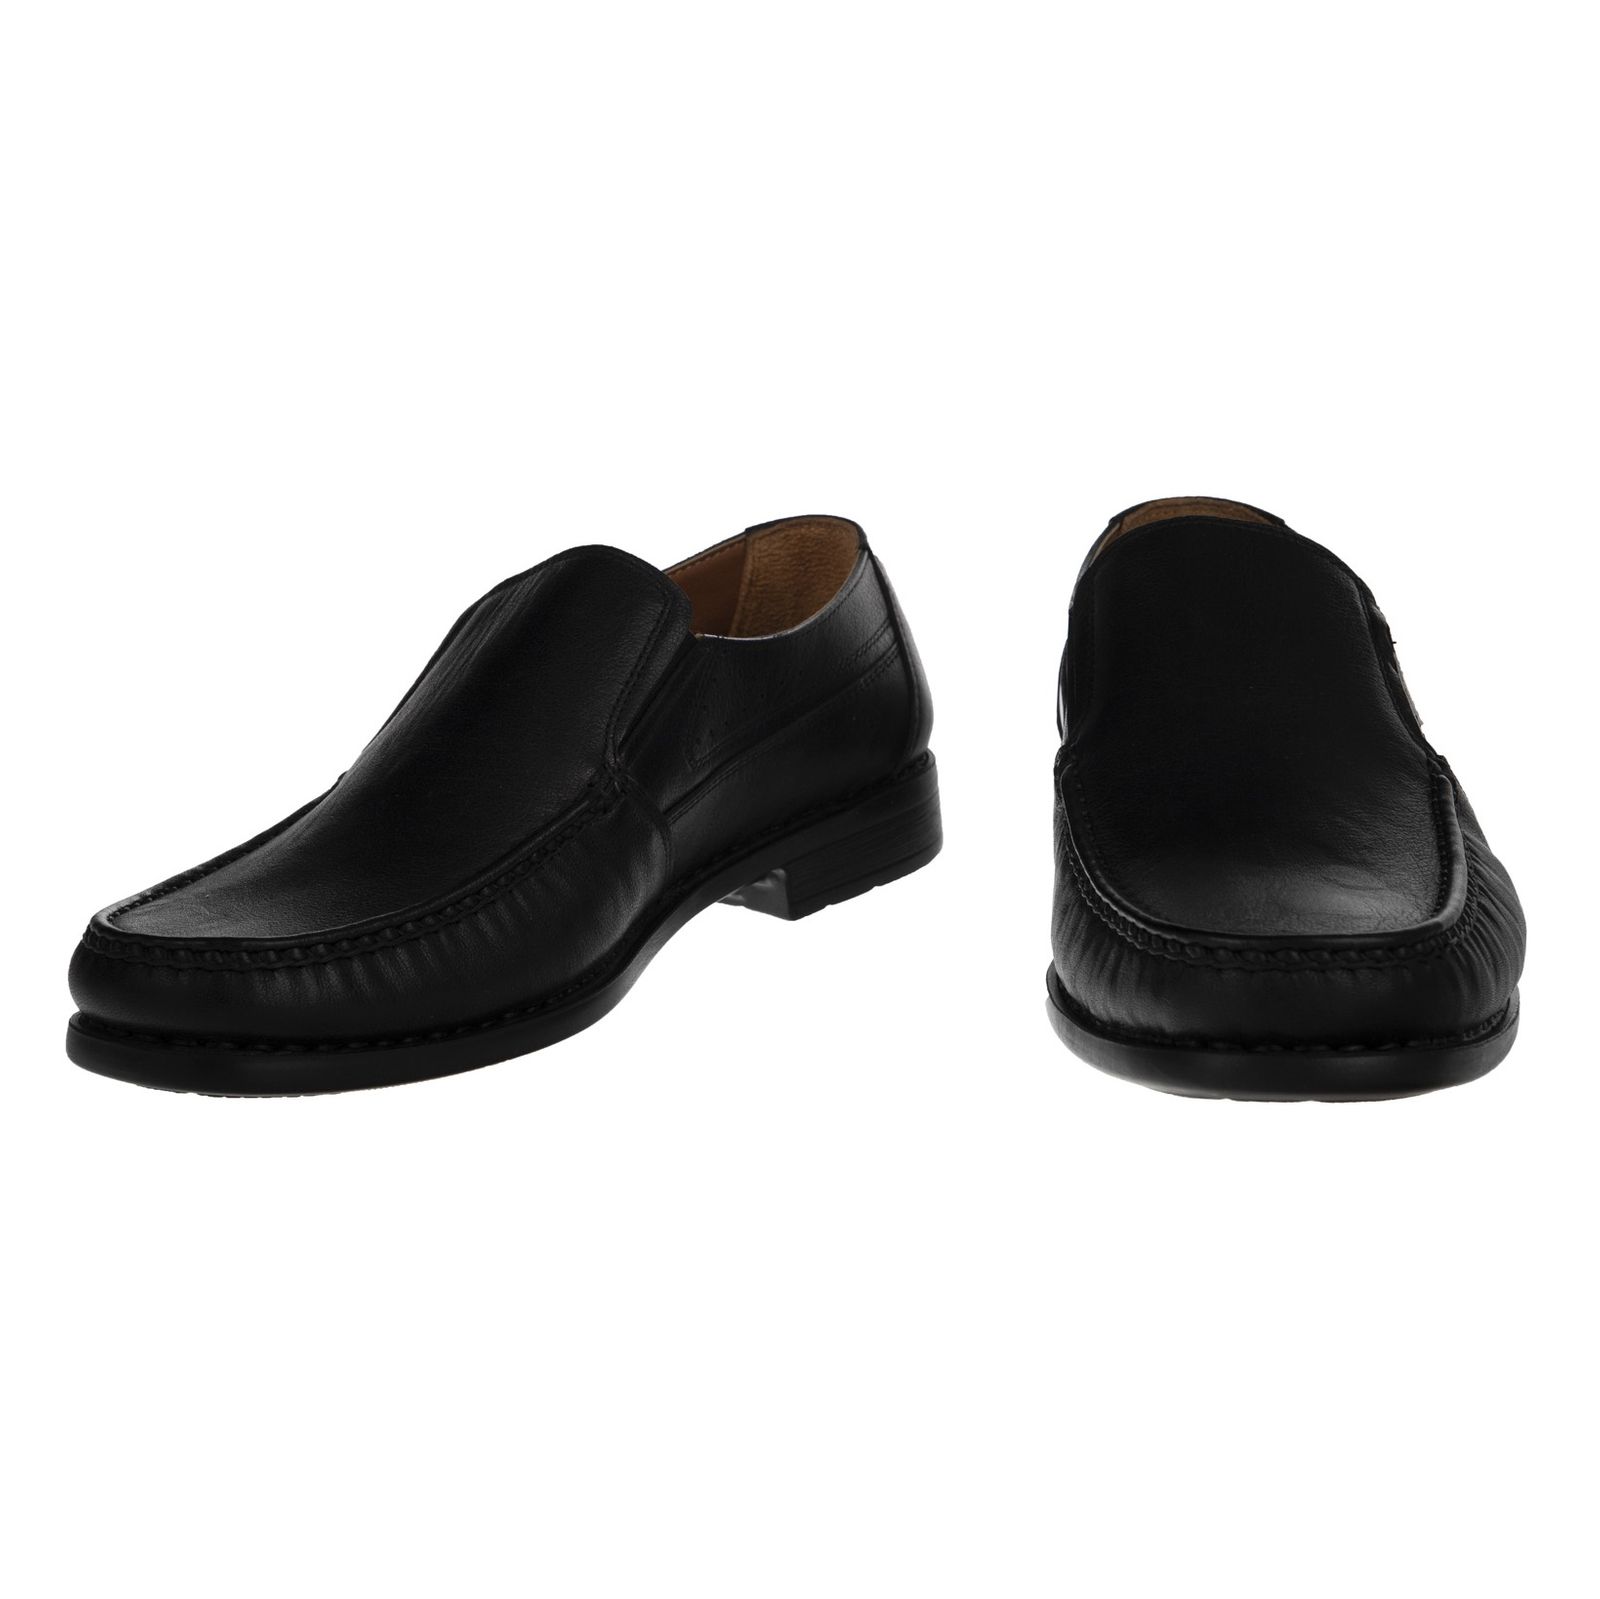 کفش روزمره مردانه پولاریس مدل 100294636-101 - مشکی - 4